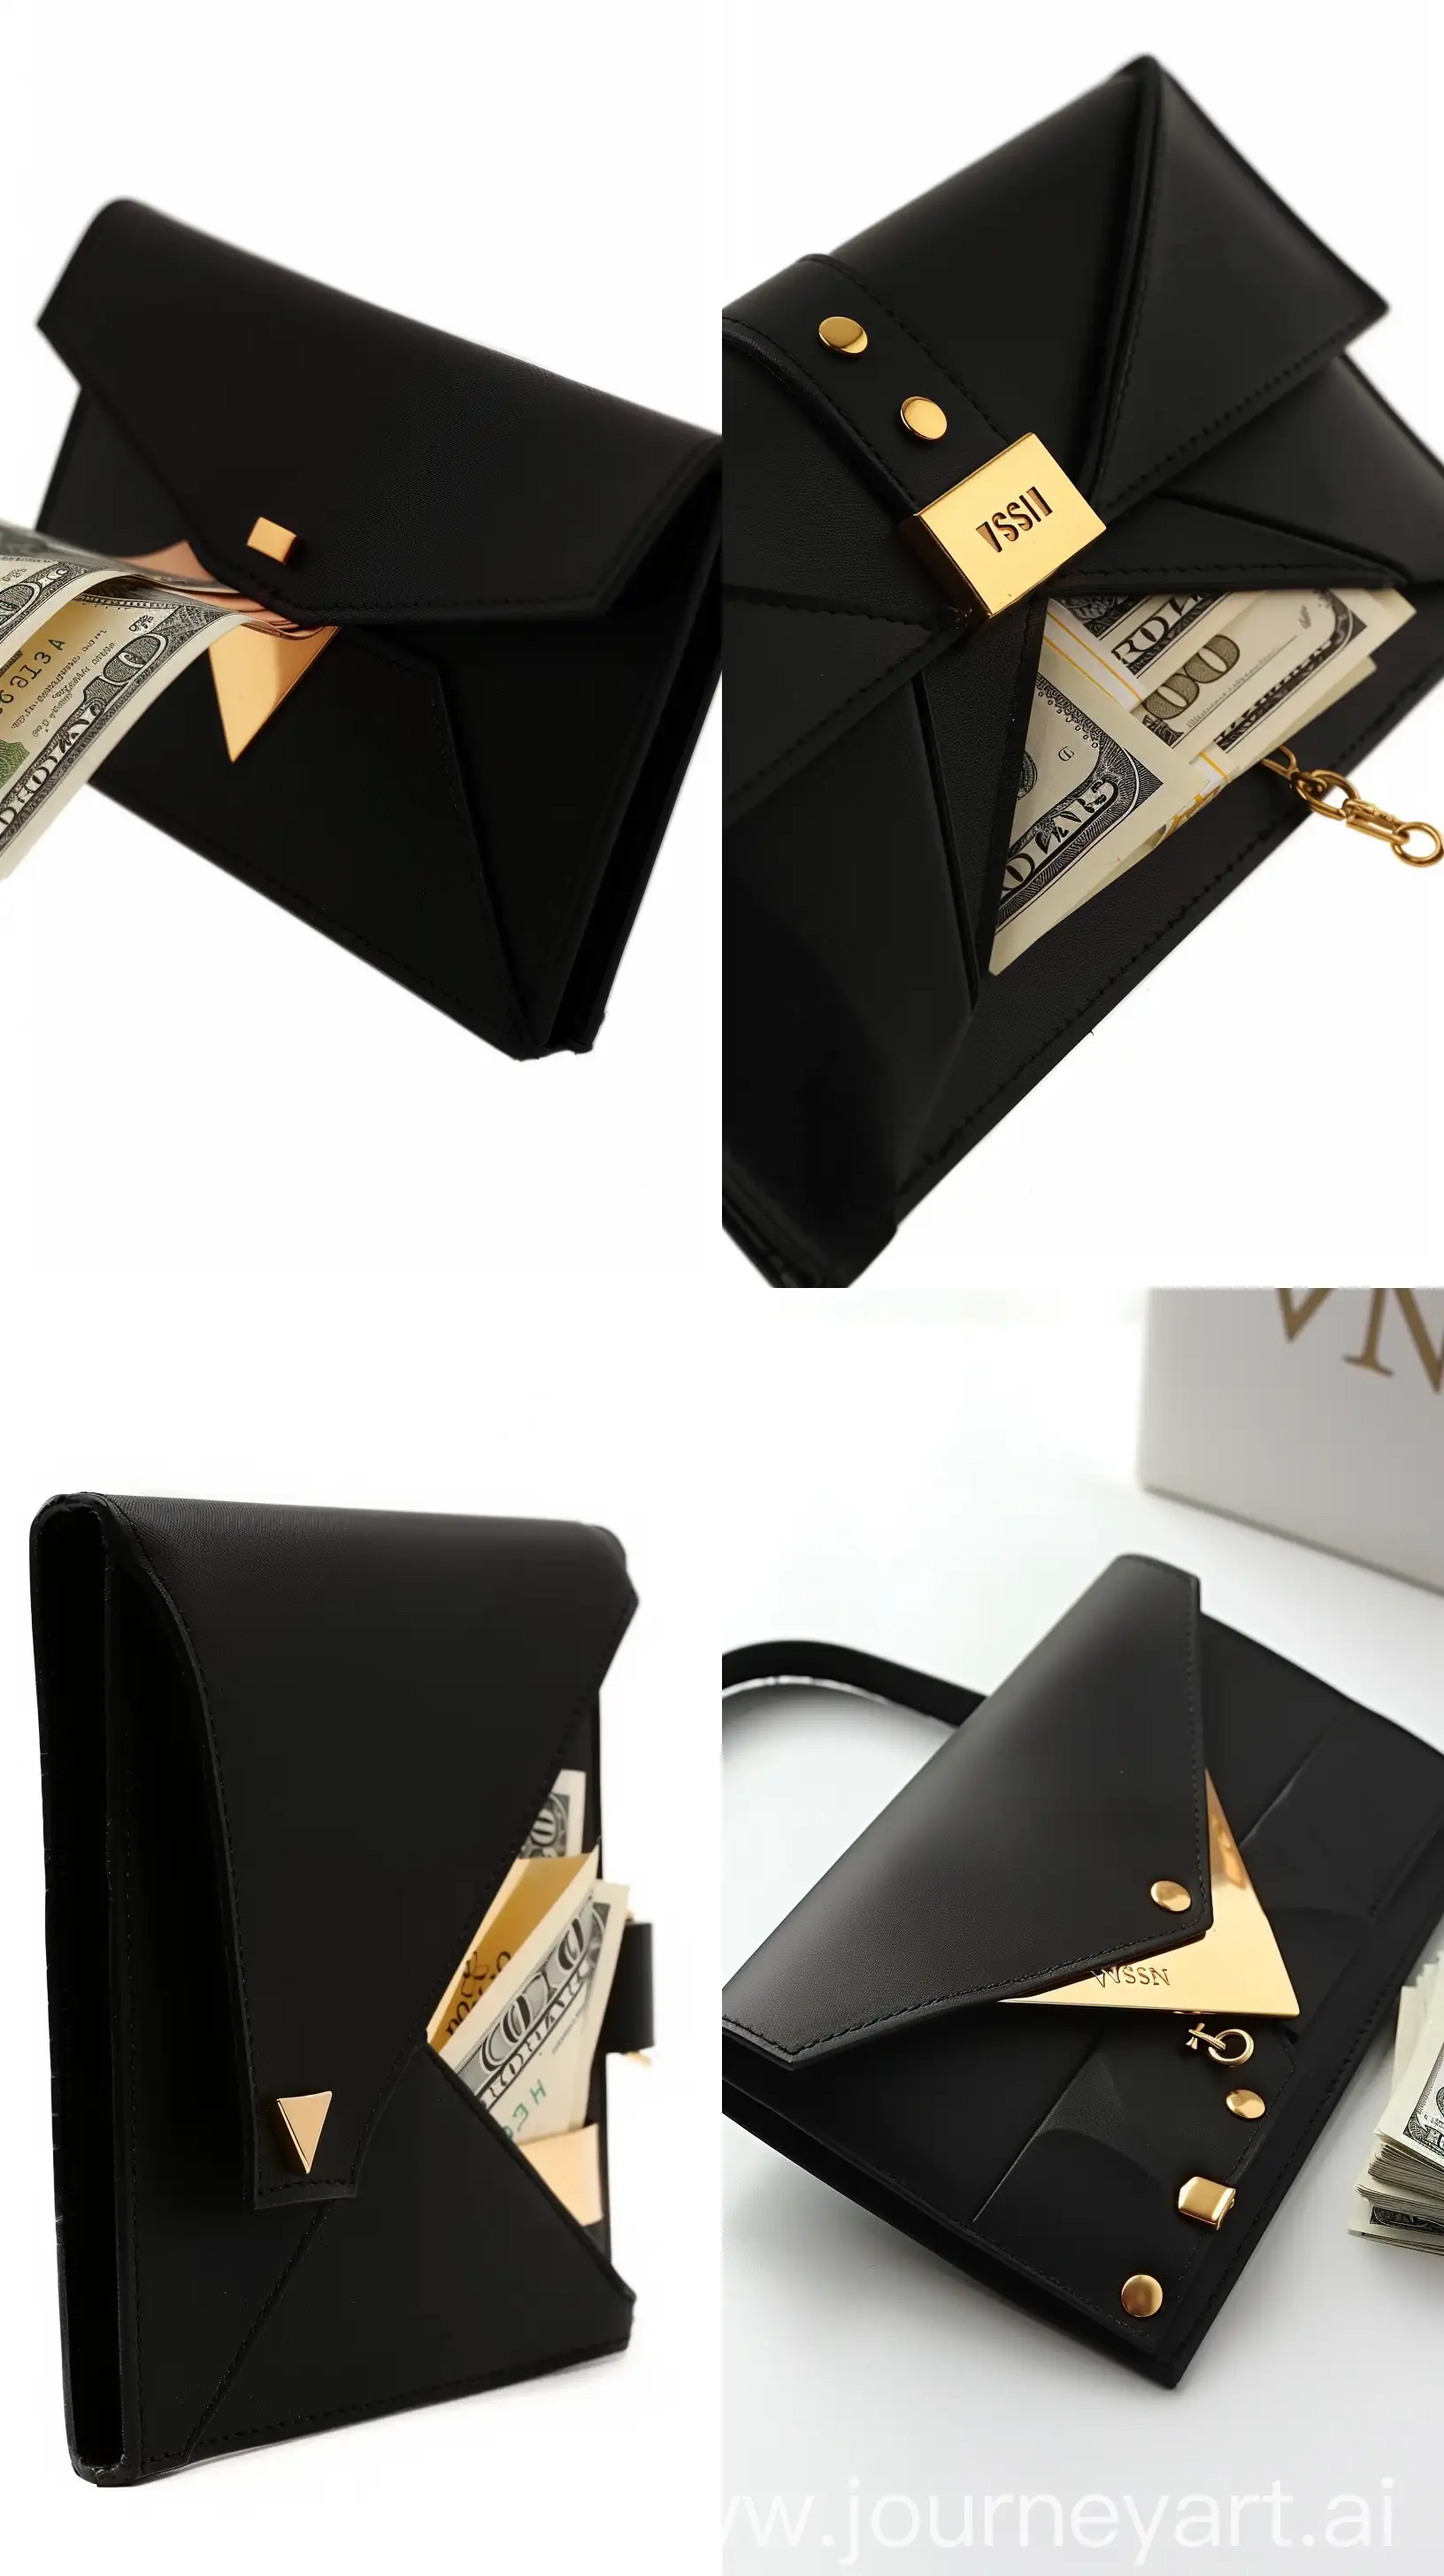 Black Vissin Leather Women's Wallet with 100-dollar bills coming out, white background, 35mm --sref https://i.pinimg.com/736x/d4/ed/aa/d4edaaaf095c549b39db07cbef618969.jpg --v 6 --ar 9:16